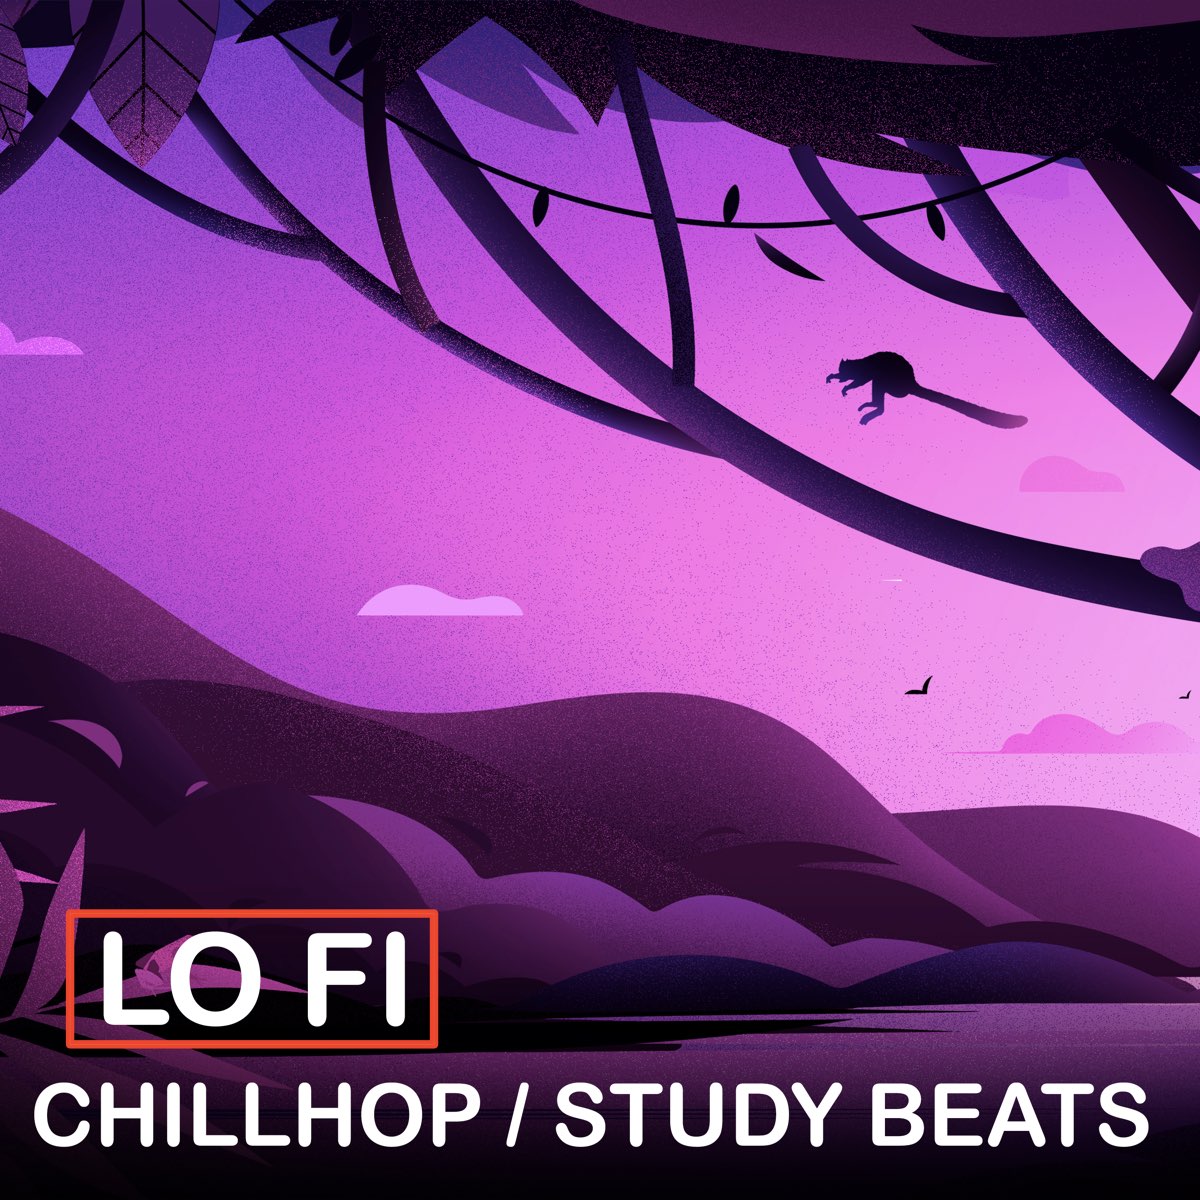 LoFi Chill Hop Study Beats by DashGo on 